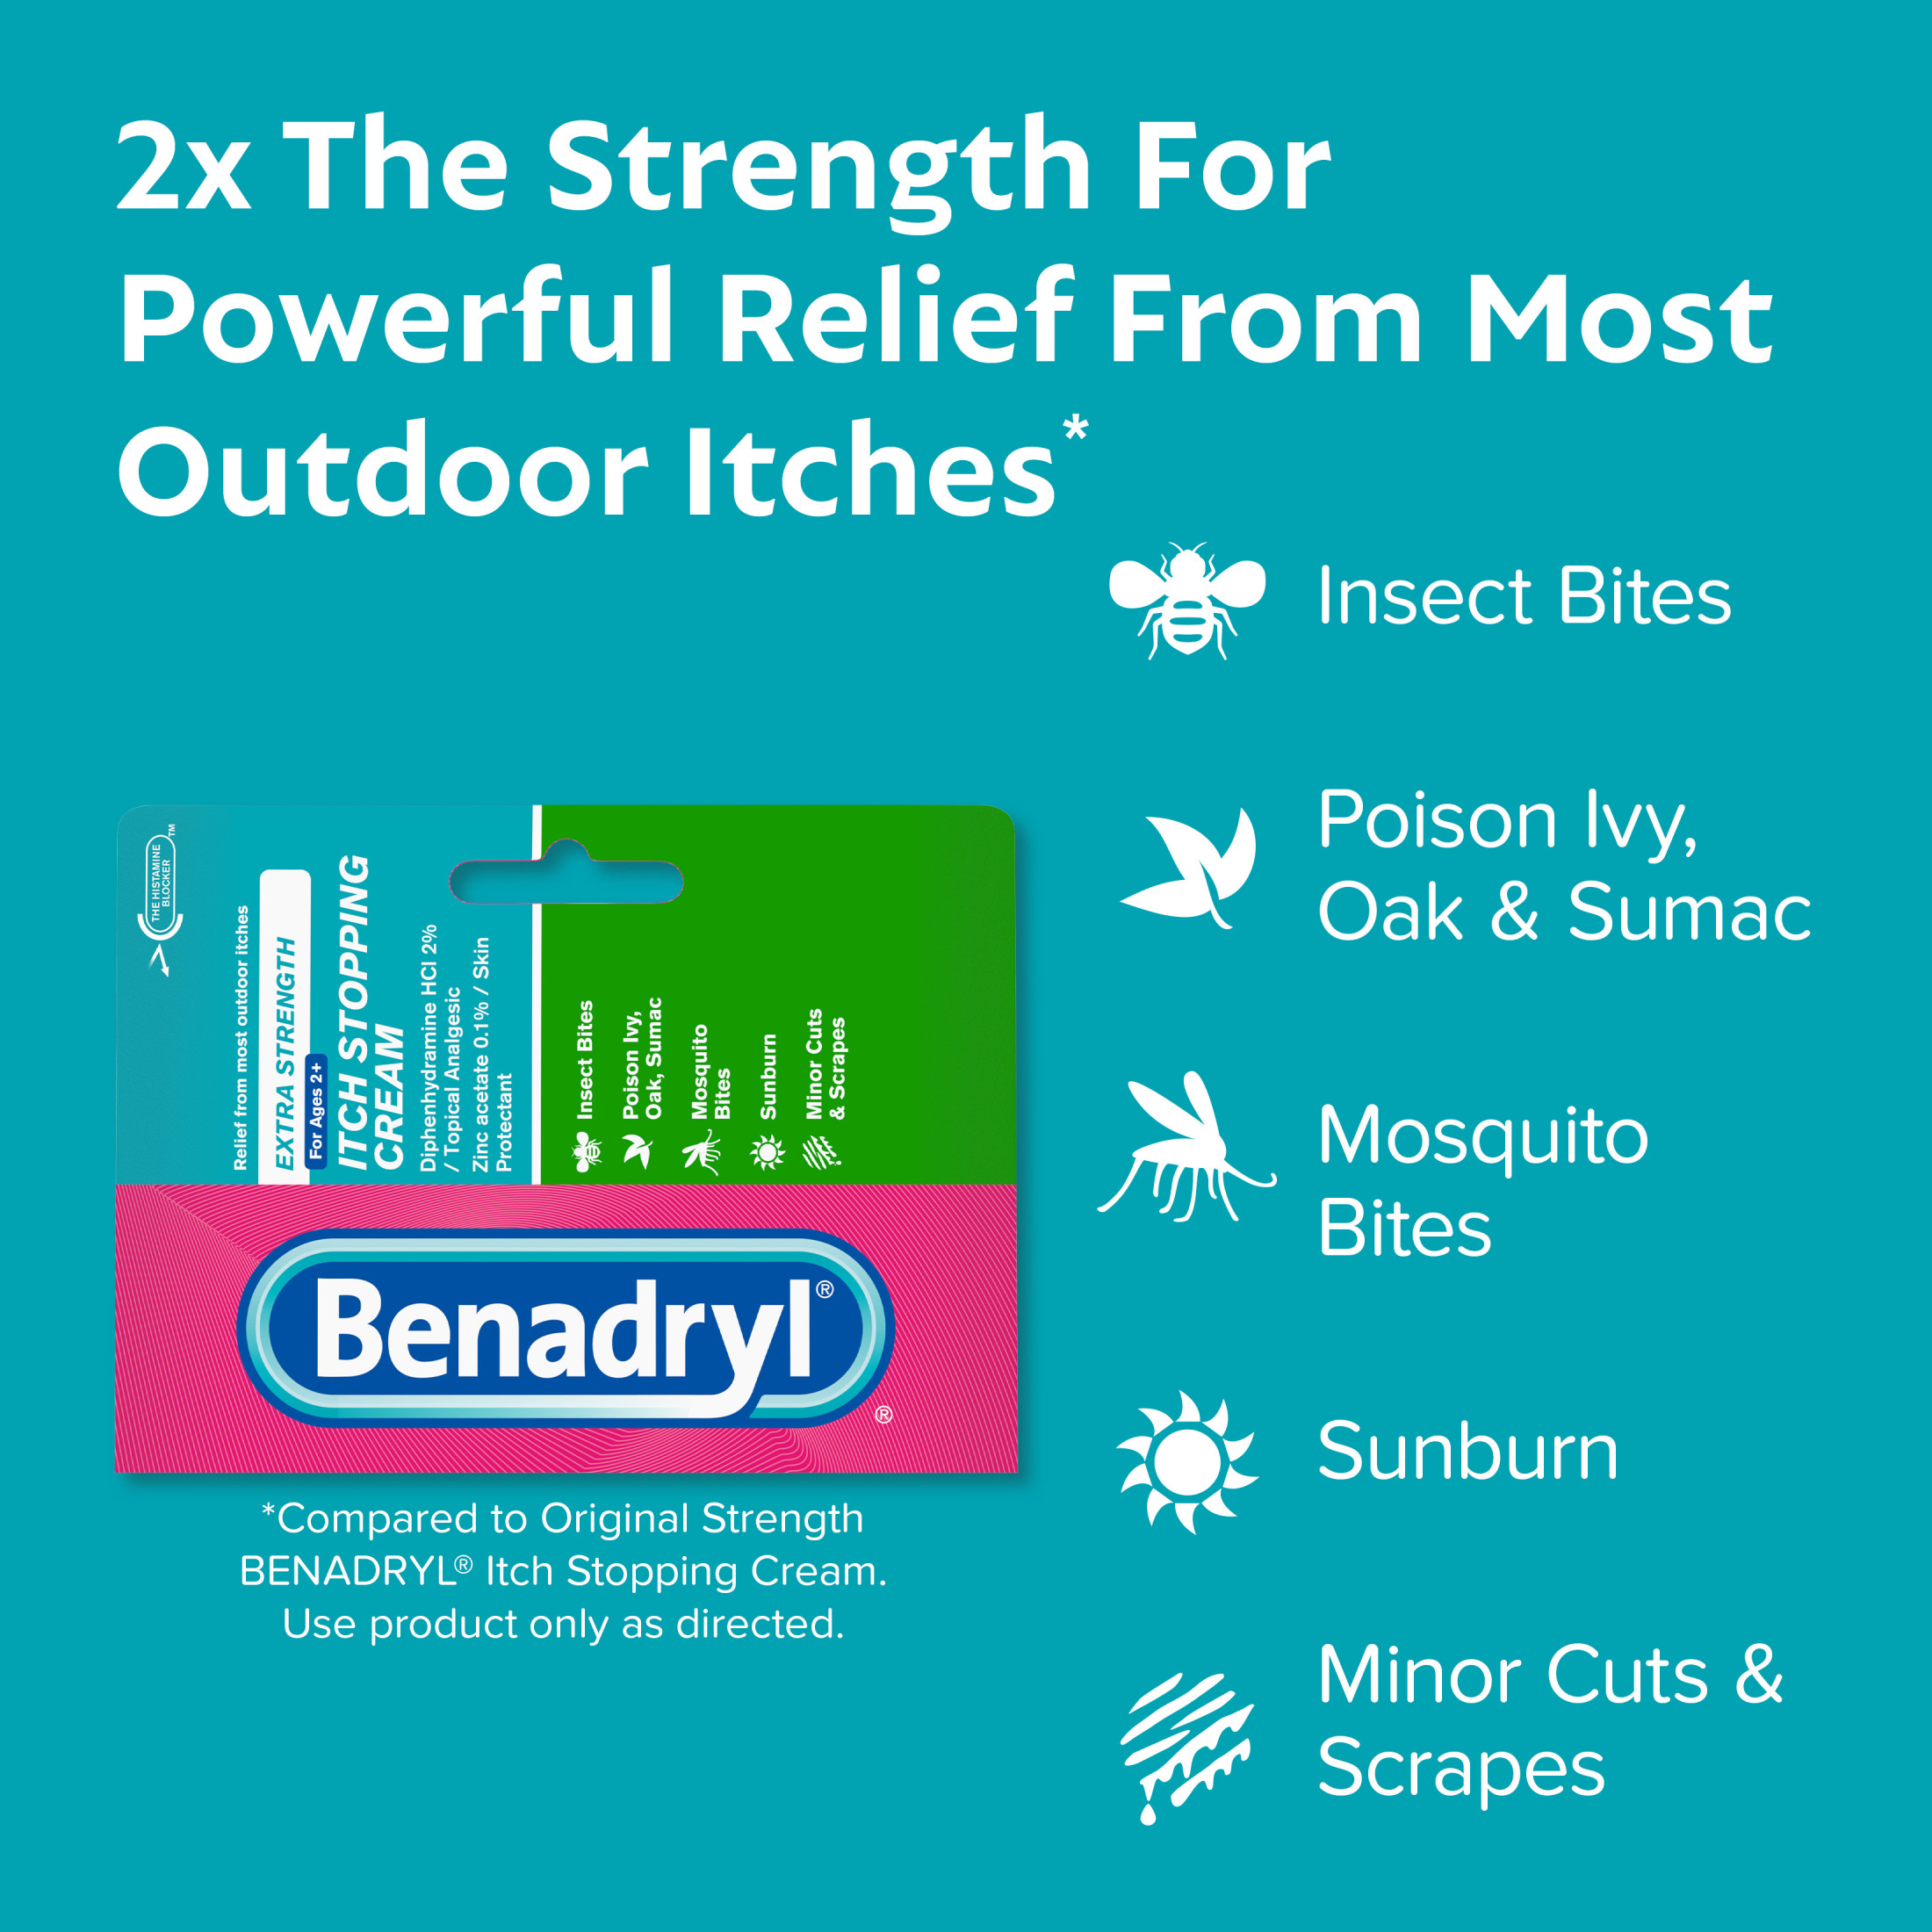 Benadryl Extra Strength Anti-Itch Topical Analgesic Cream, 1 oz - image 4 of 12